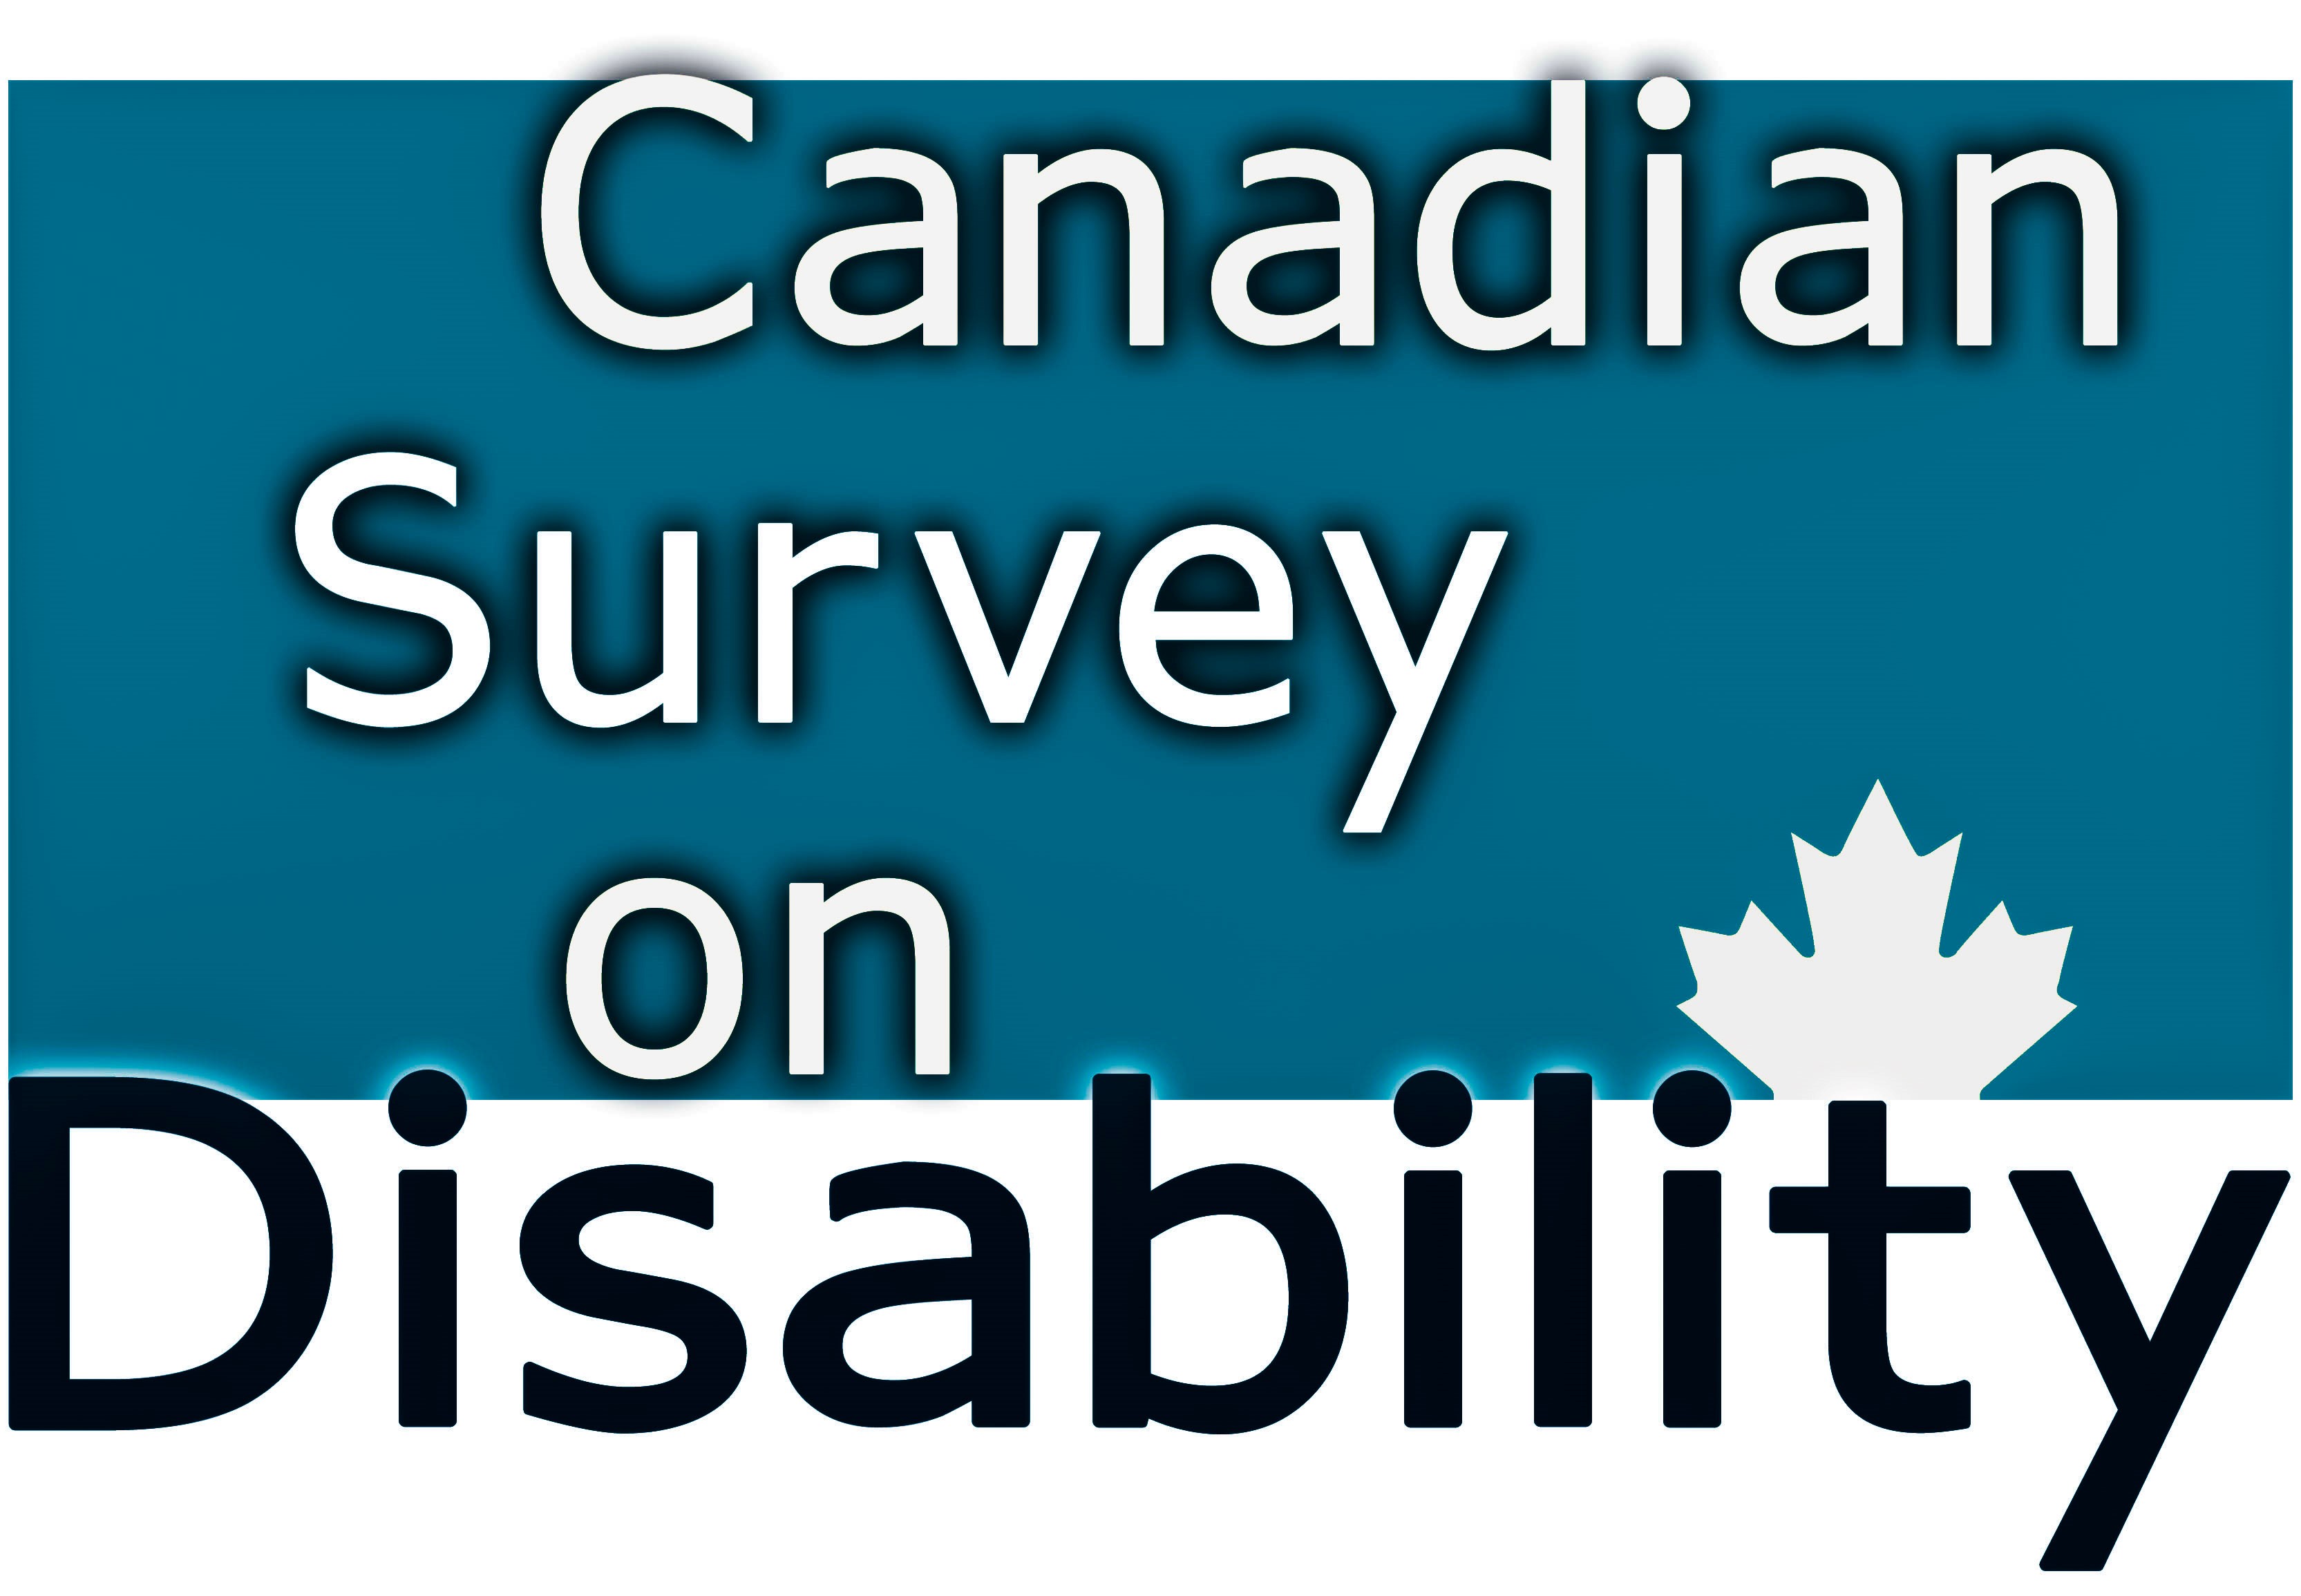 Canadian Survey on Disability